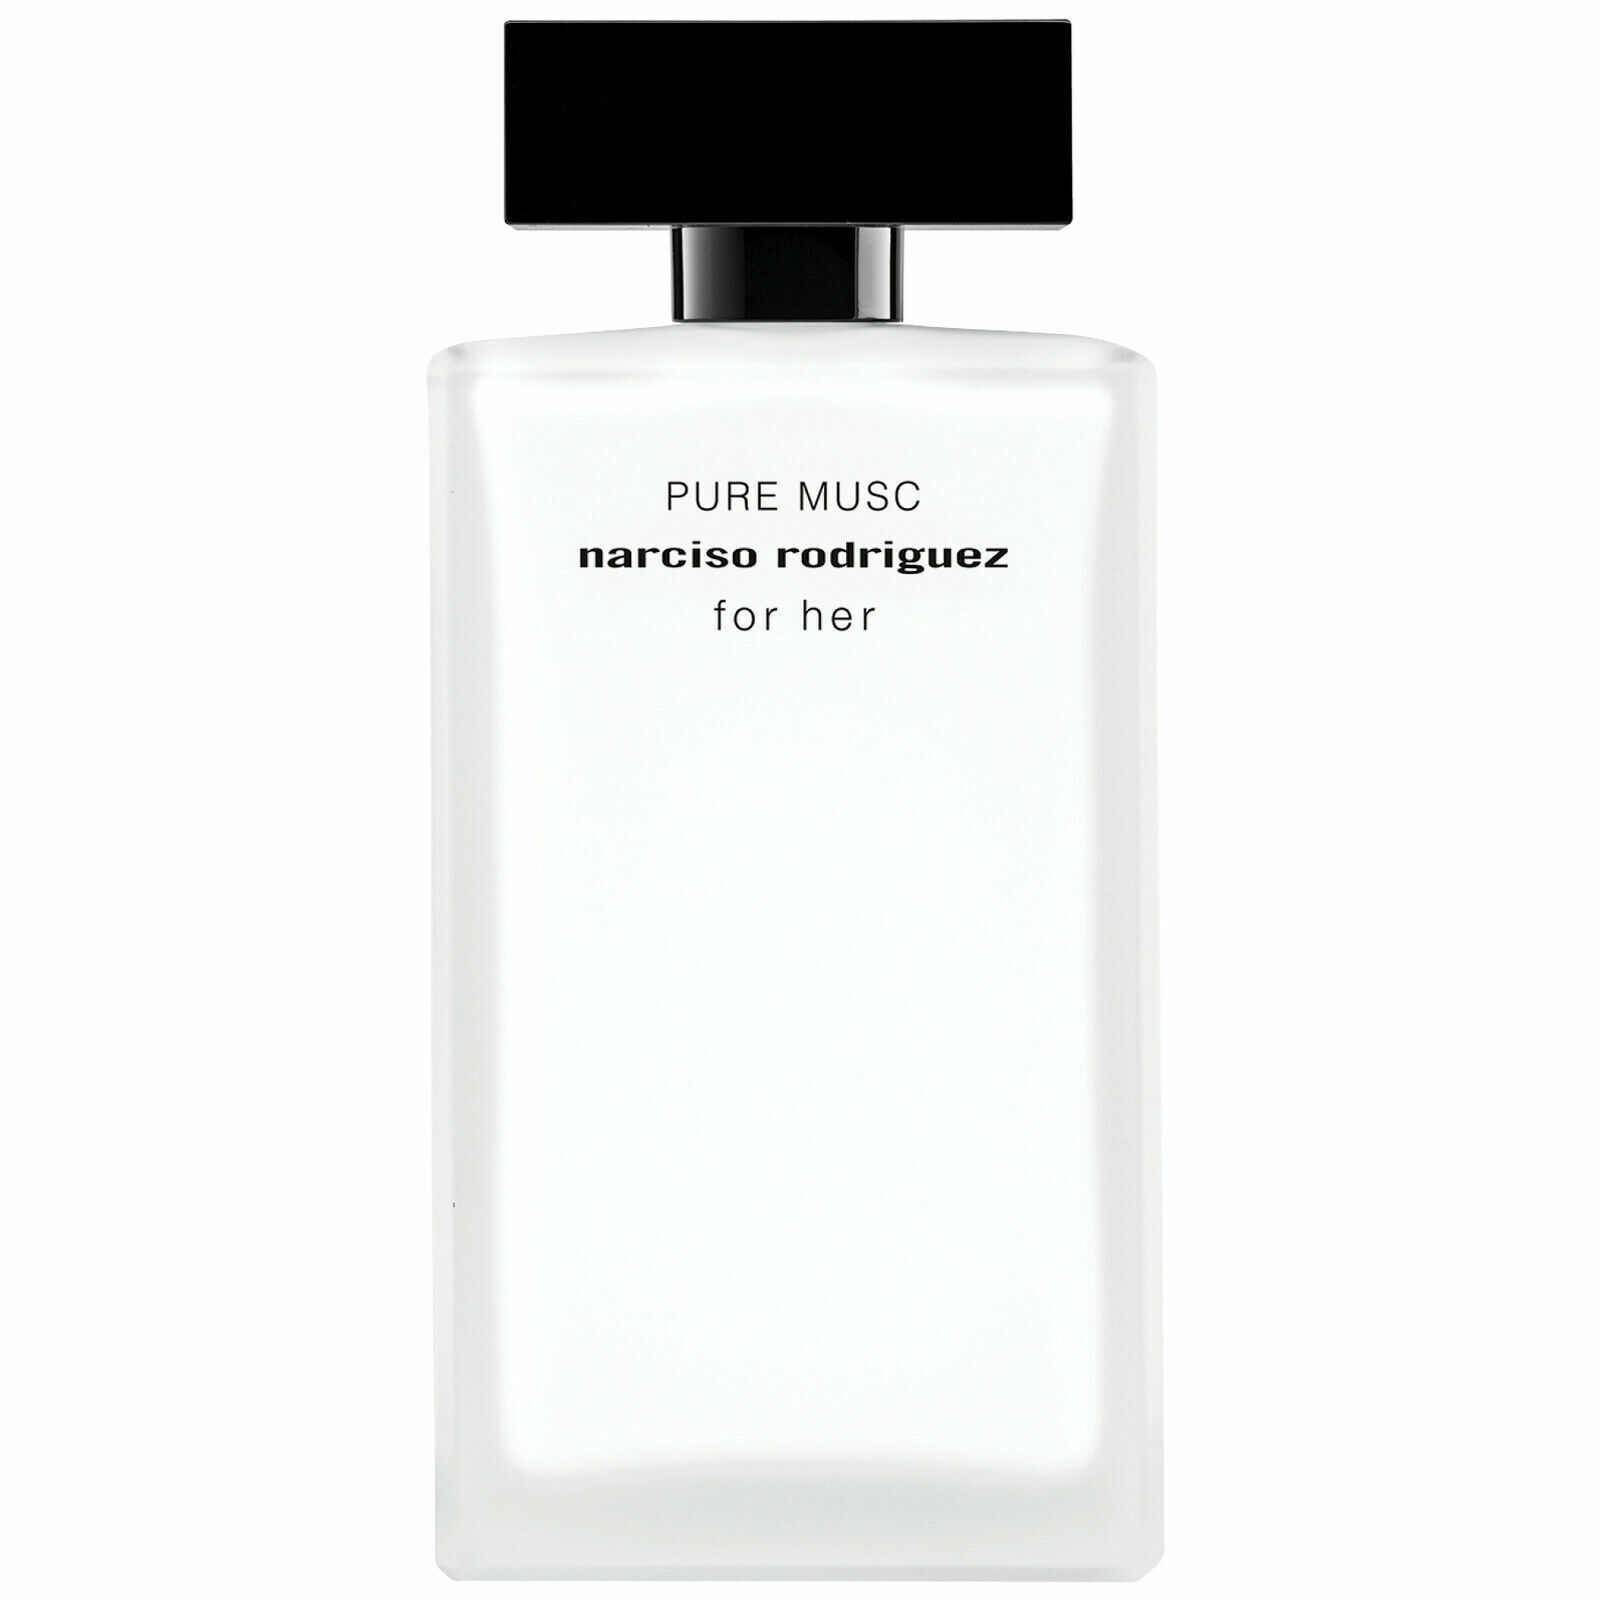 Narciso Rodriguez For Her Pure Musc 100ML EDP Eau De Parfum 100% GENUINE WOW!!! Niska cena nowej pracy